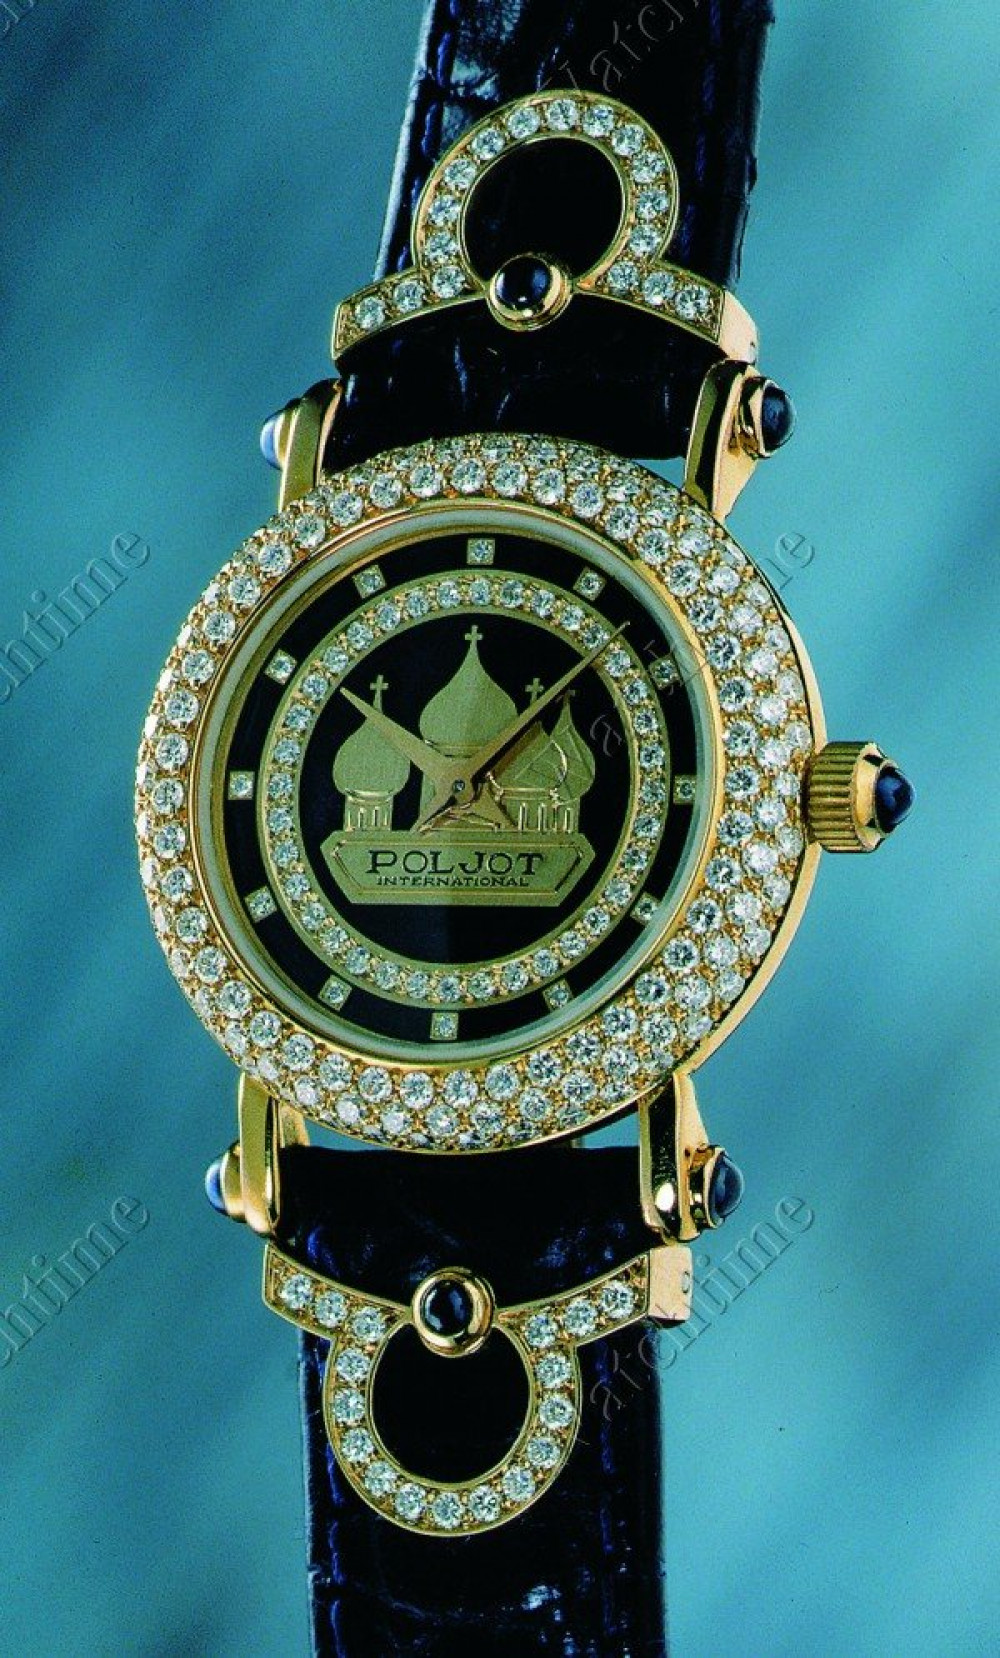 Zegarek firmy Poljot - International, model 850 Jahre Moskau